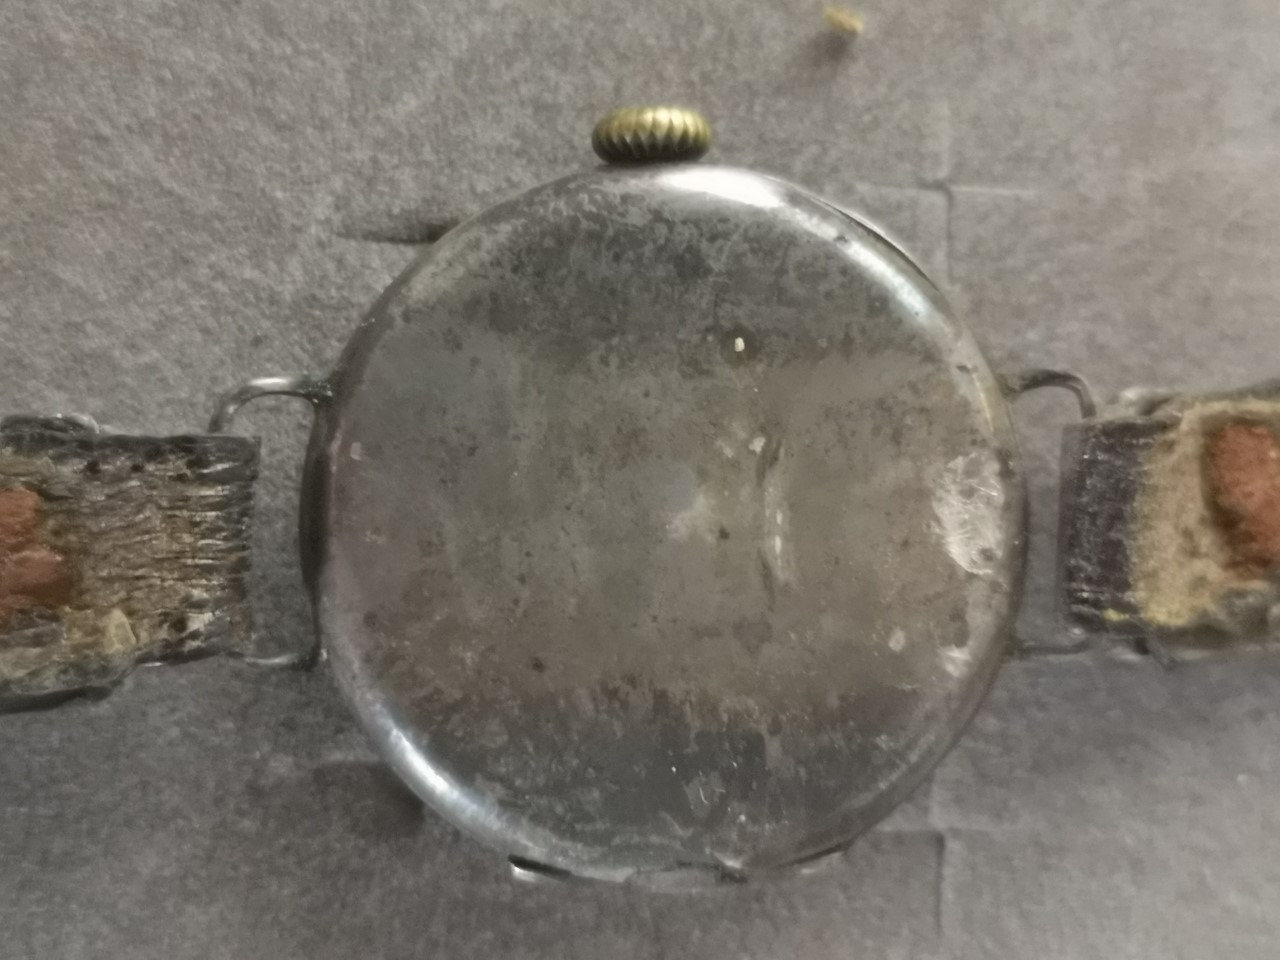 Marvin vintage Watch